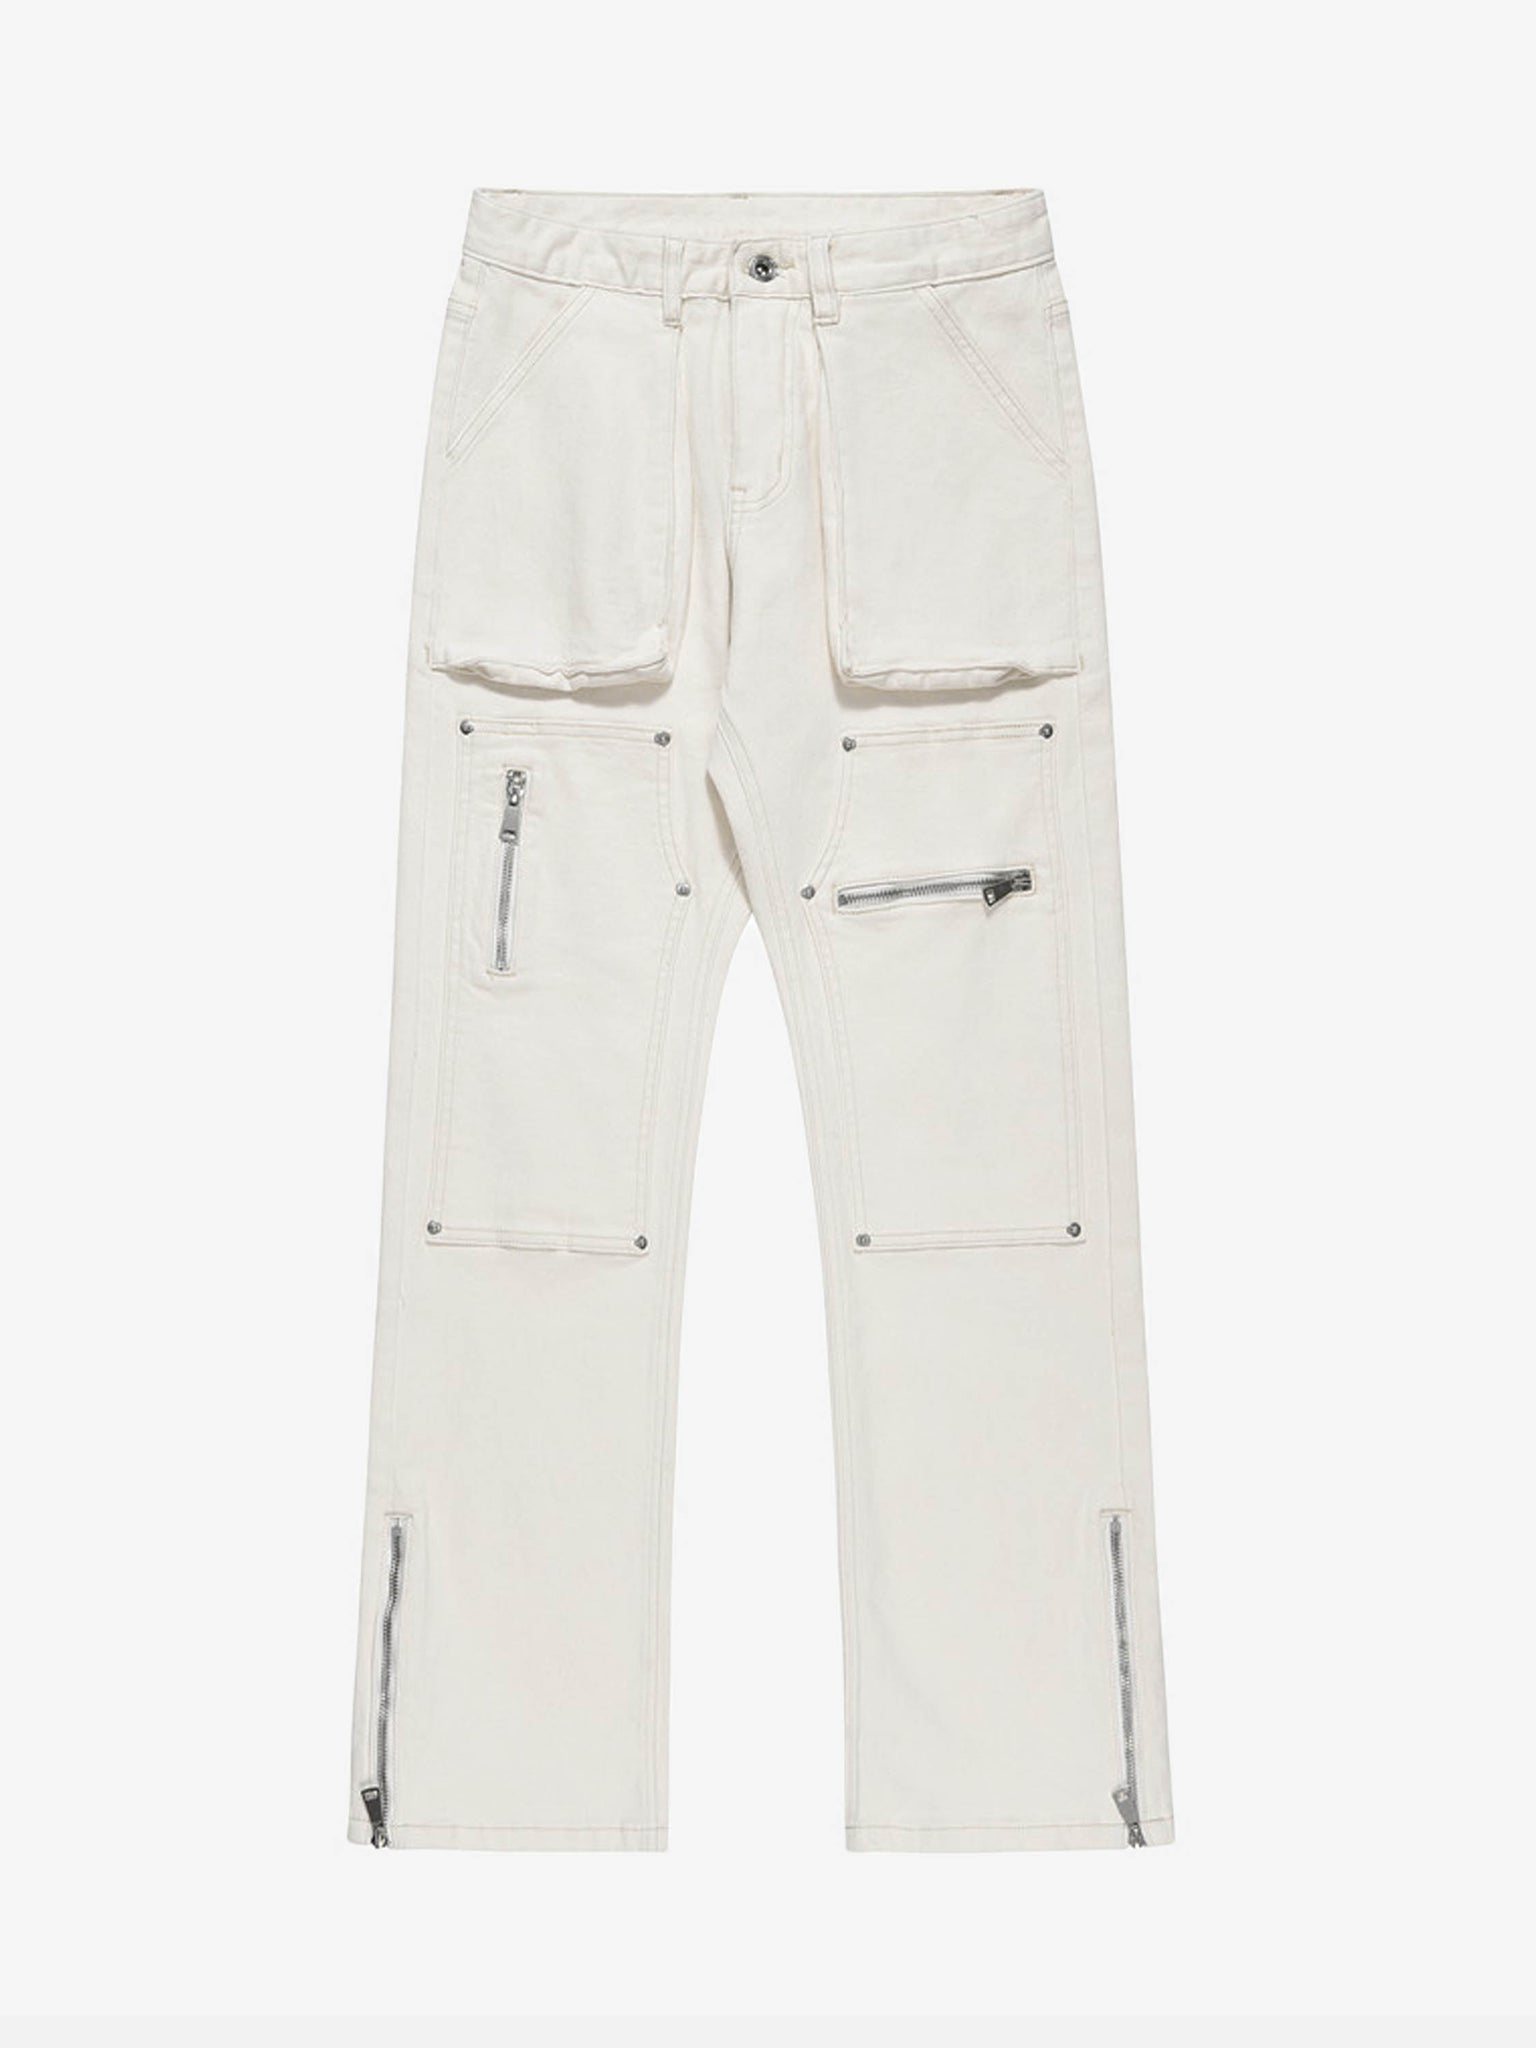 Thesupermade High Street Zipper Patchwork Pocket Denim Pants Straight Leg